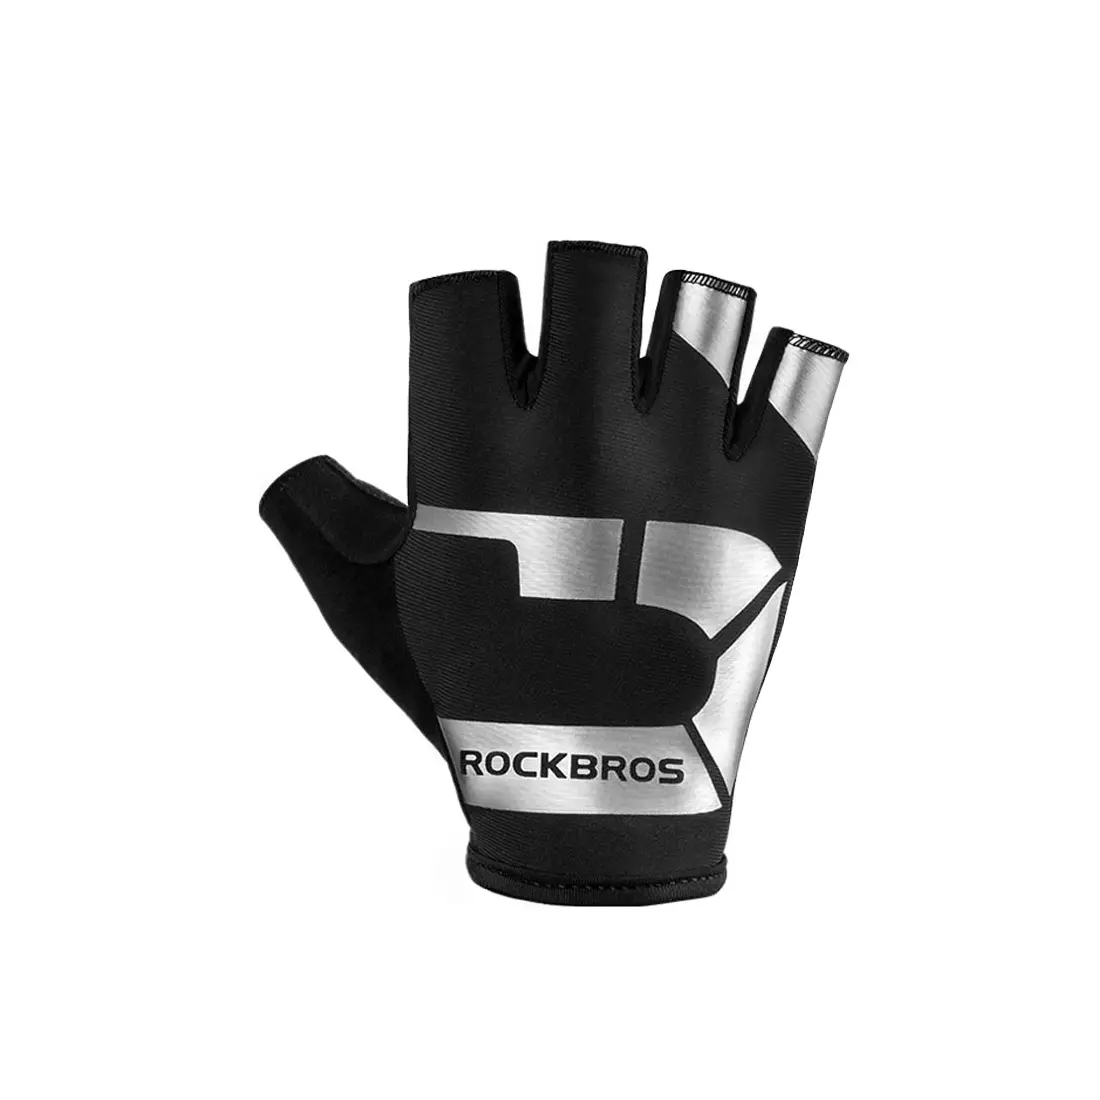 Rockbros cycling gloves short finger, black S220